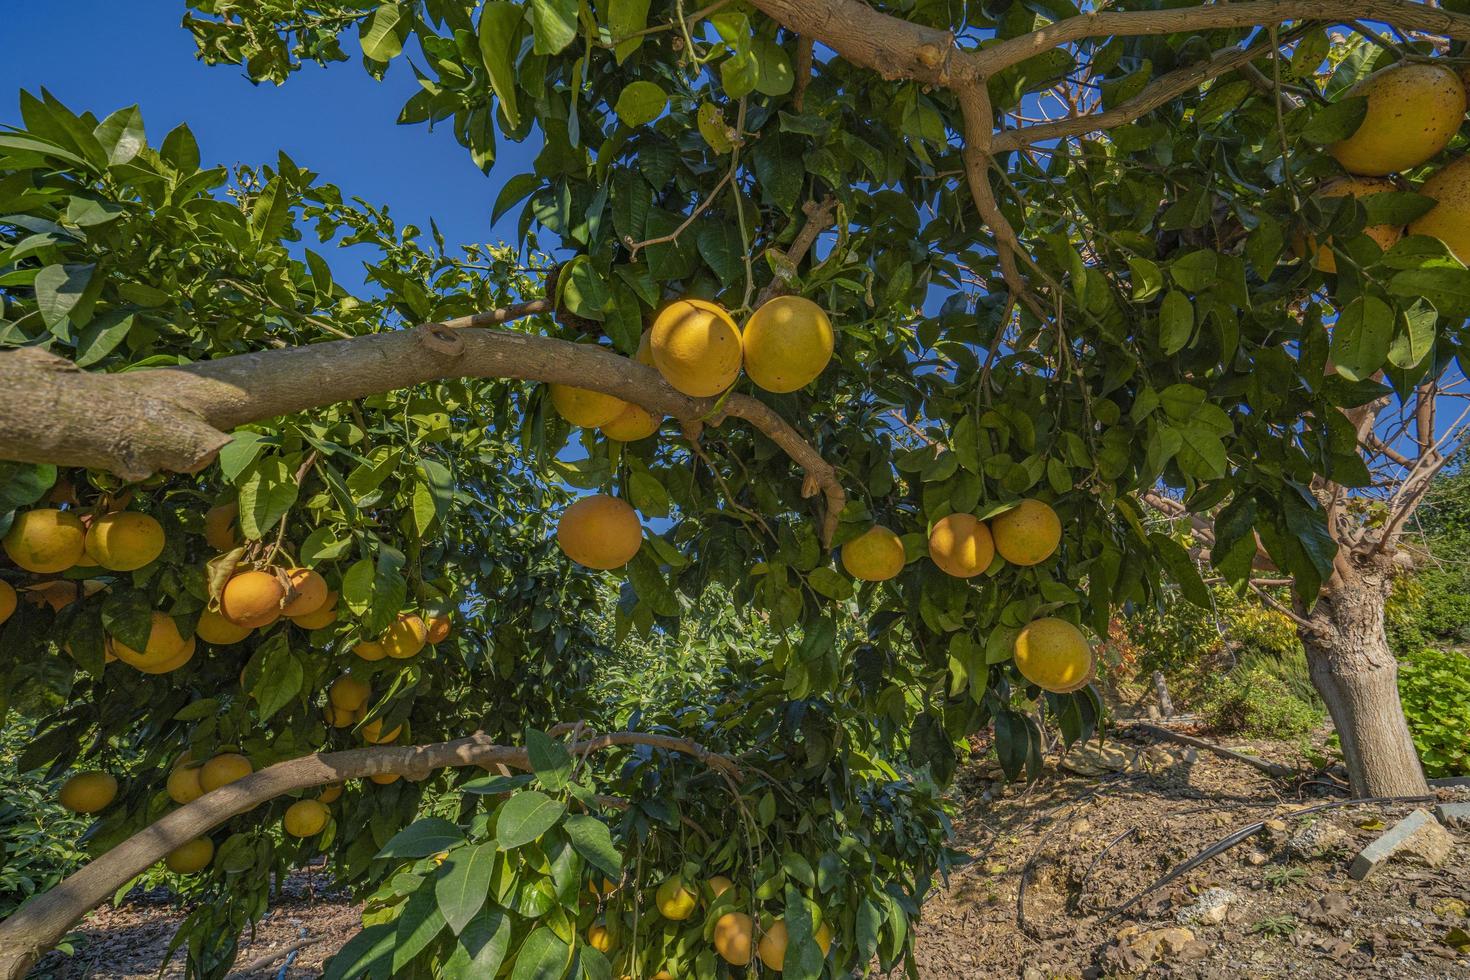 tropisk apelsiner på en gren. hälsa vitaminer foto